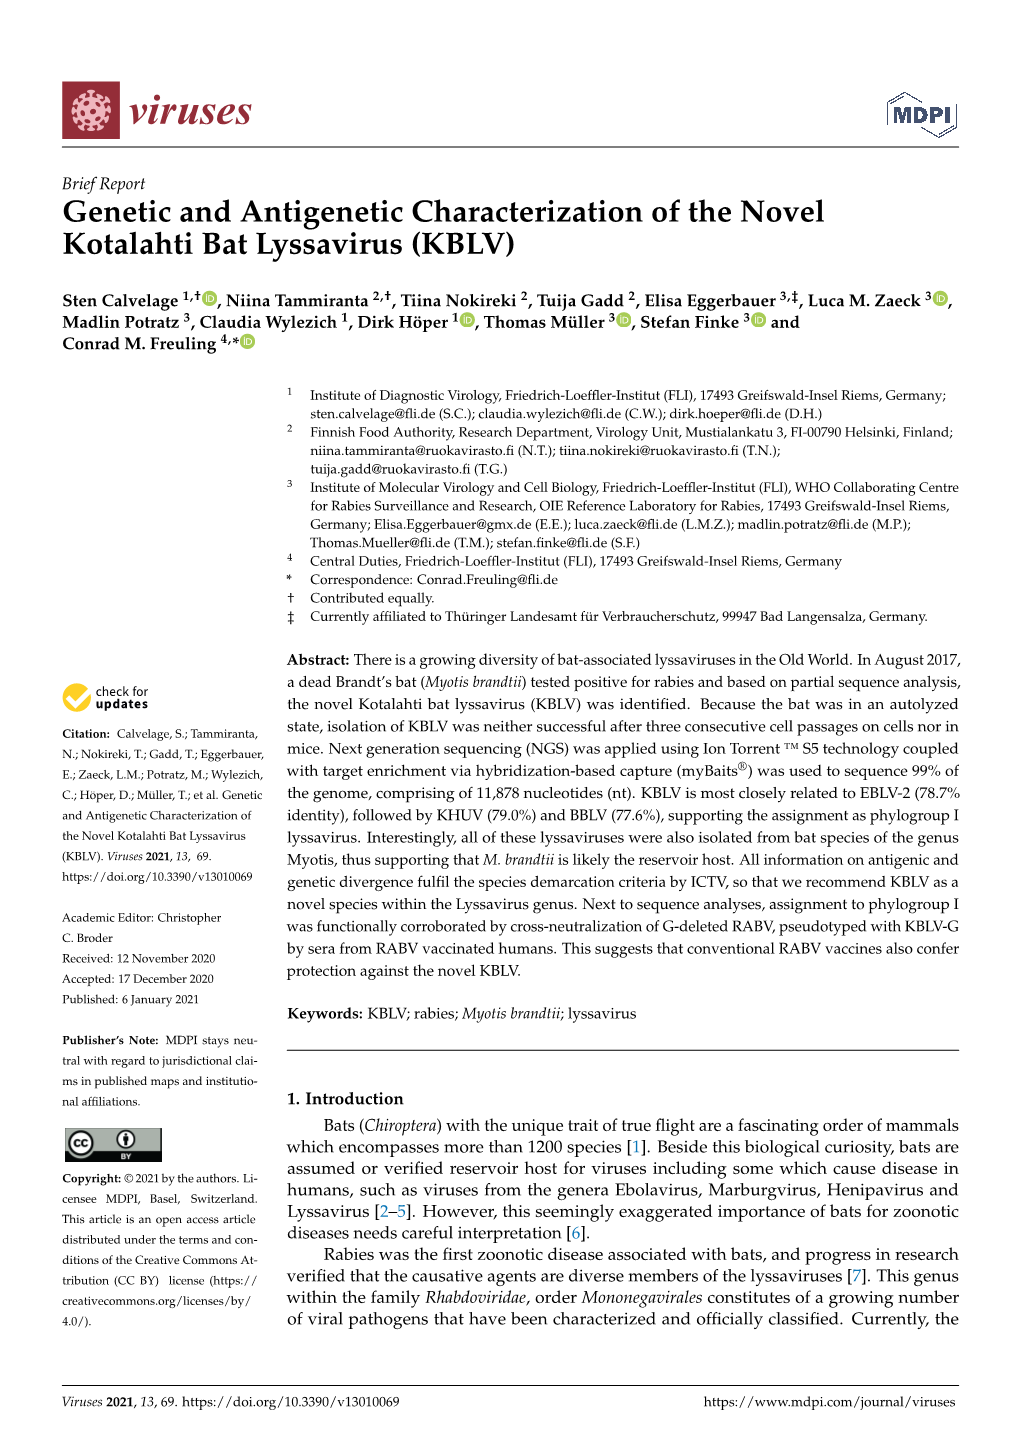 Genetic and Antigenetic Characterization of the Novel Kotalahti Bat Lyssavirus (KBLV)